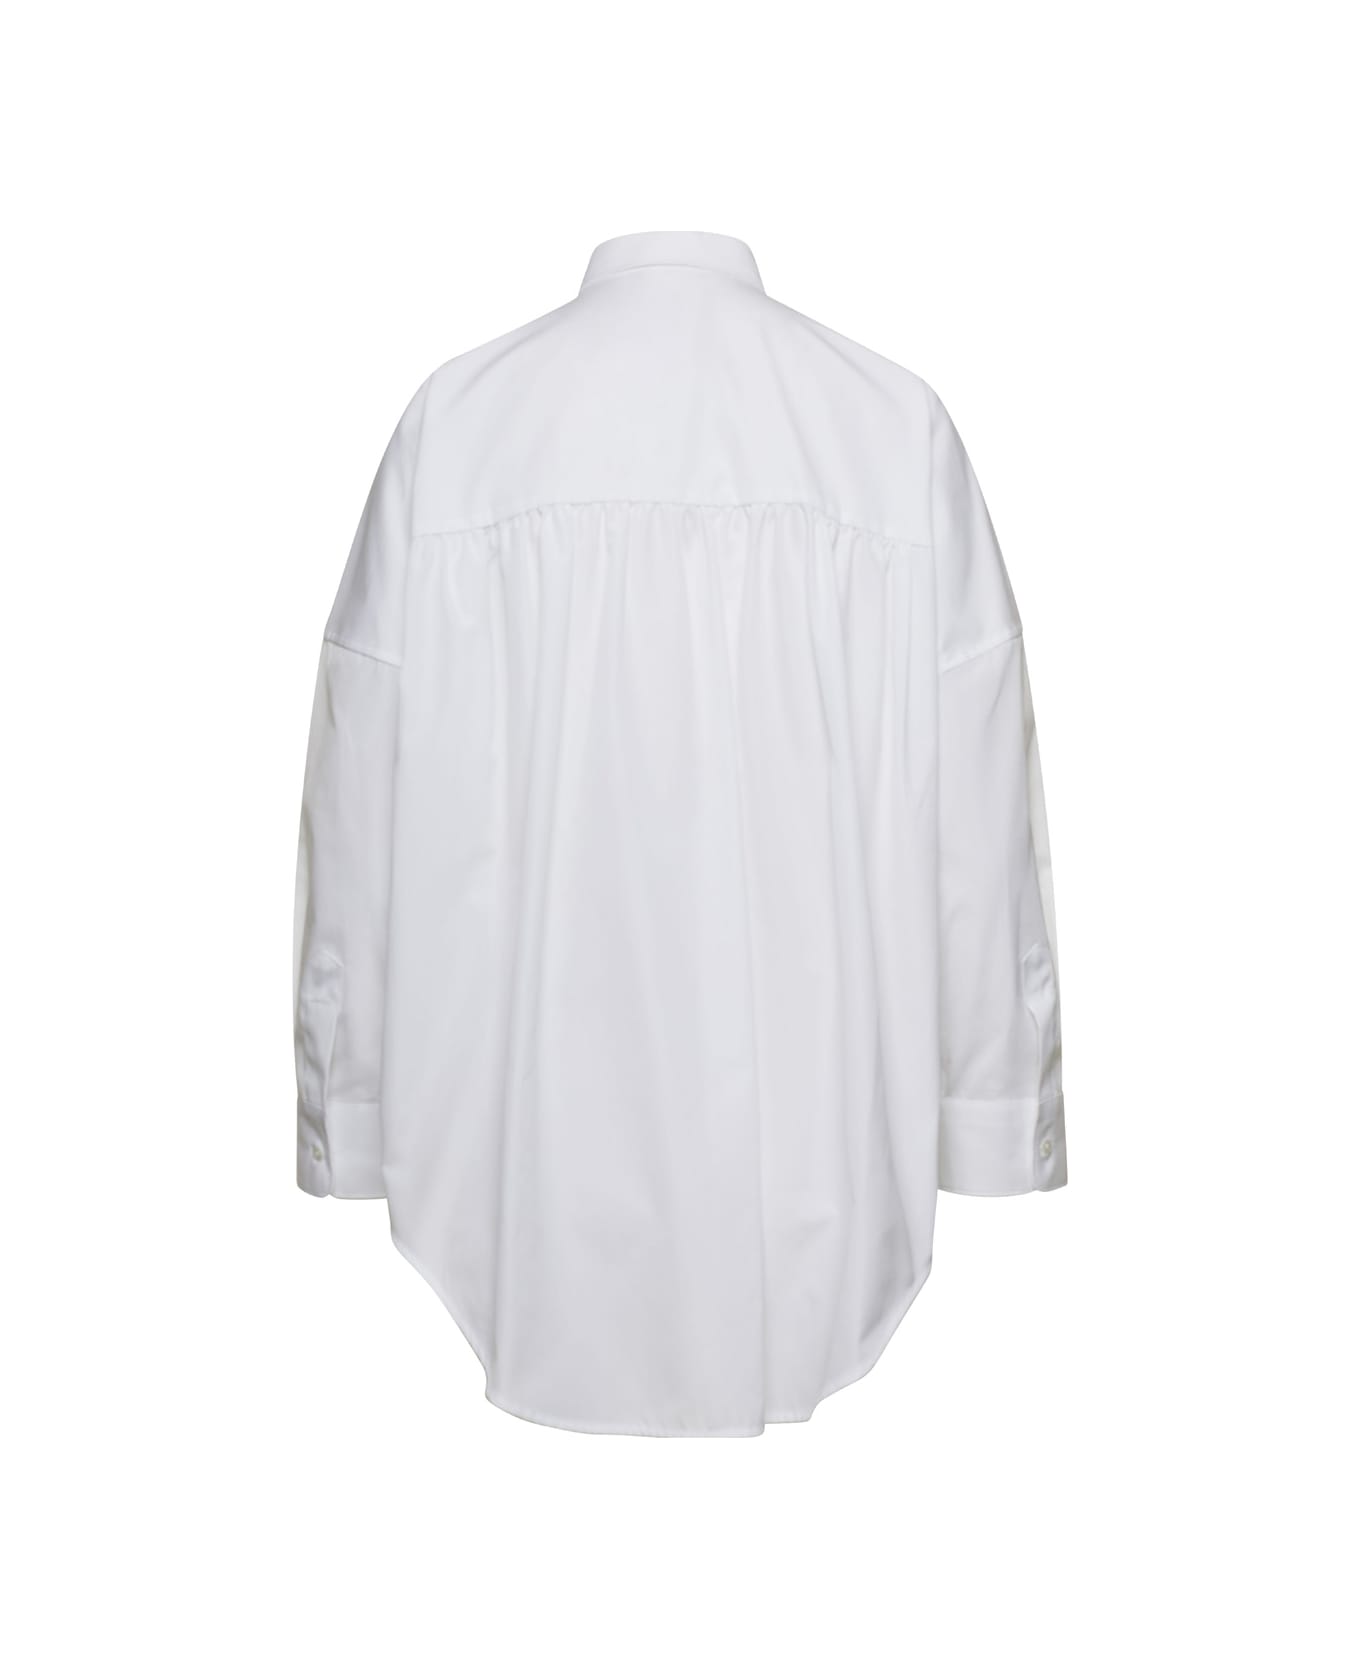 Sara Roka Scout S1a1097 Sa11630 Cc5 (012 - Camicia M/3-4) - White シャツ